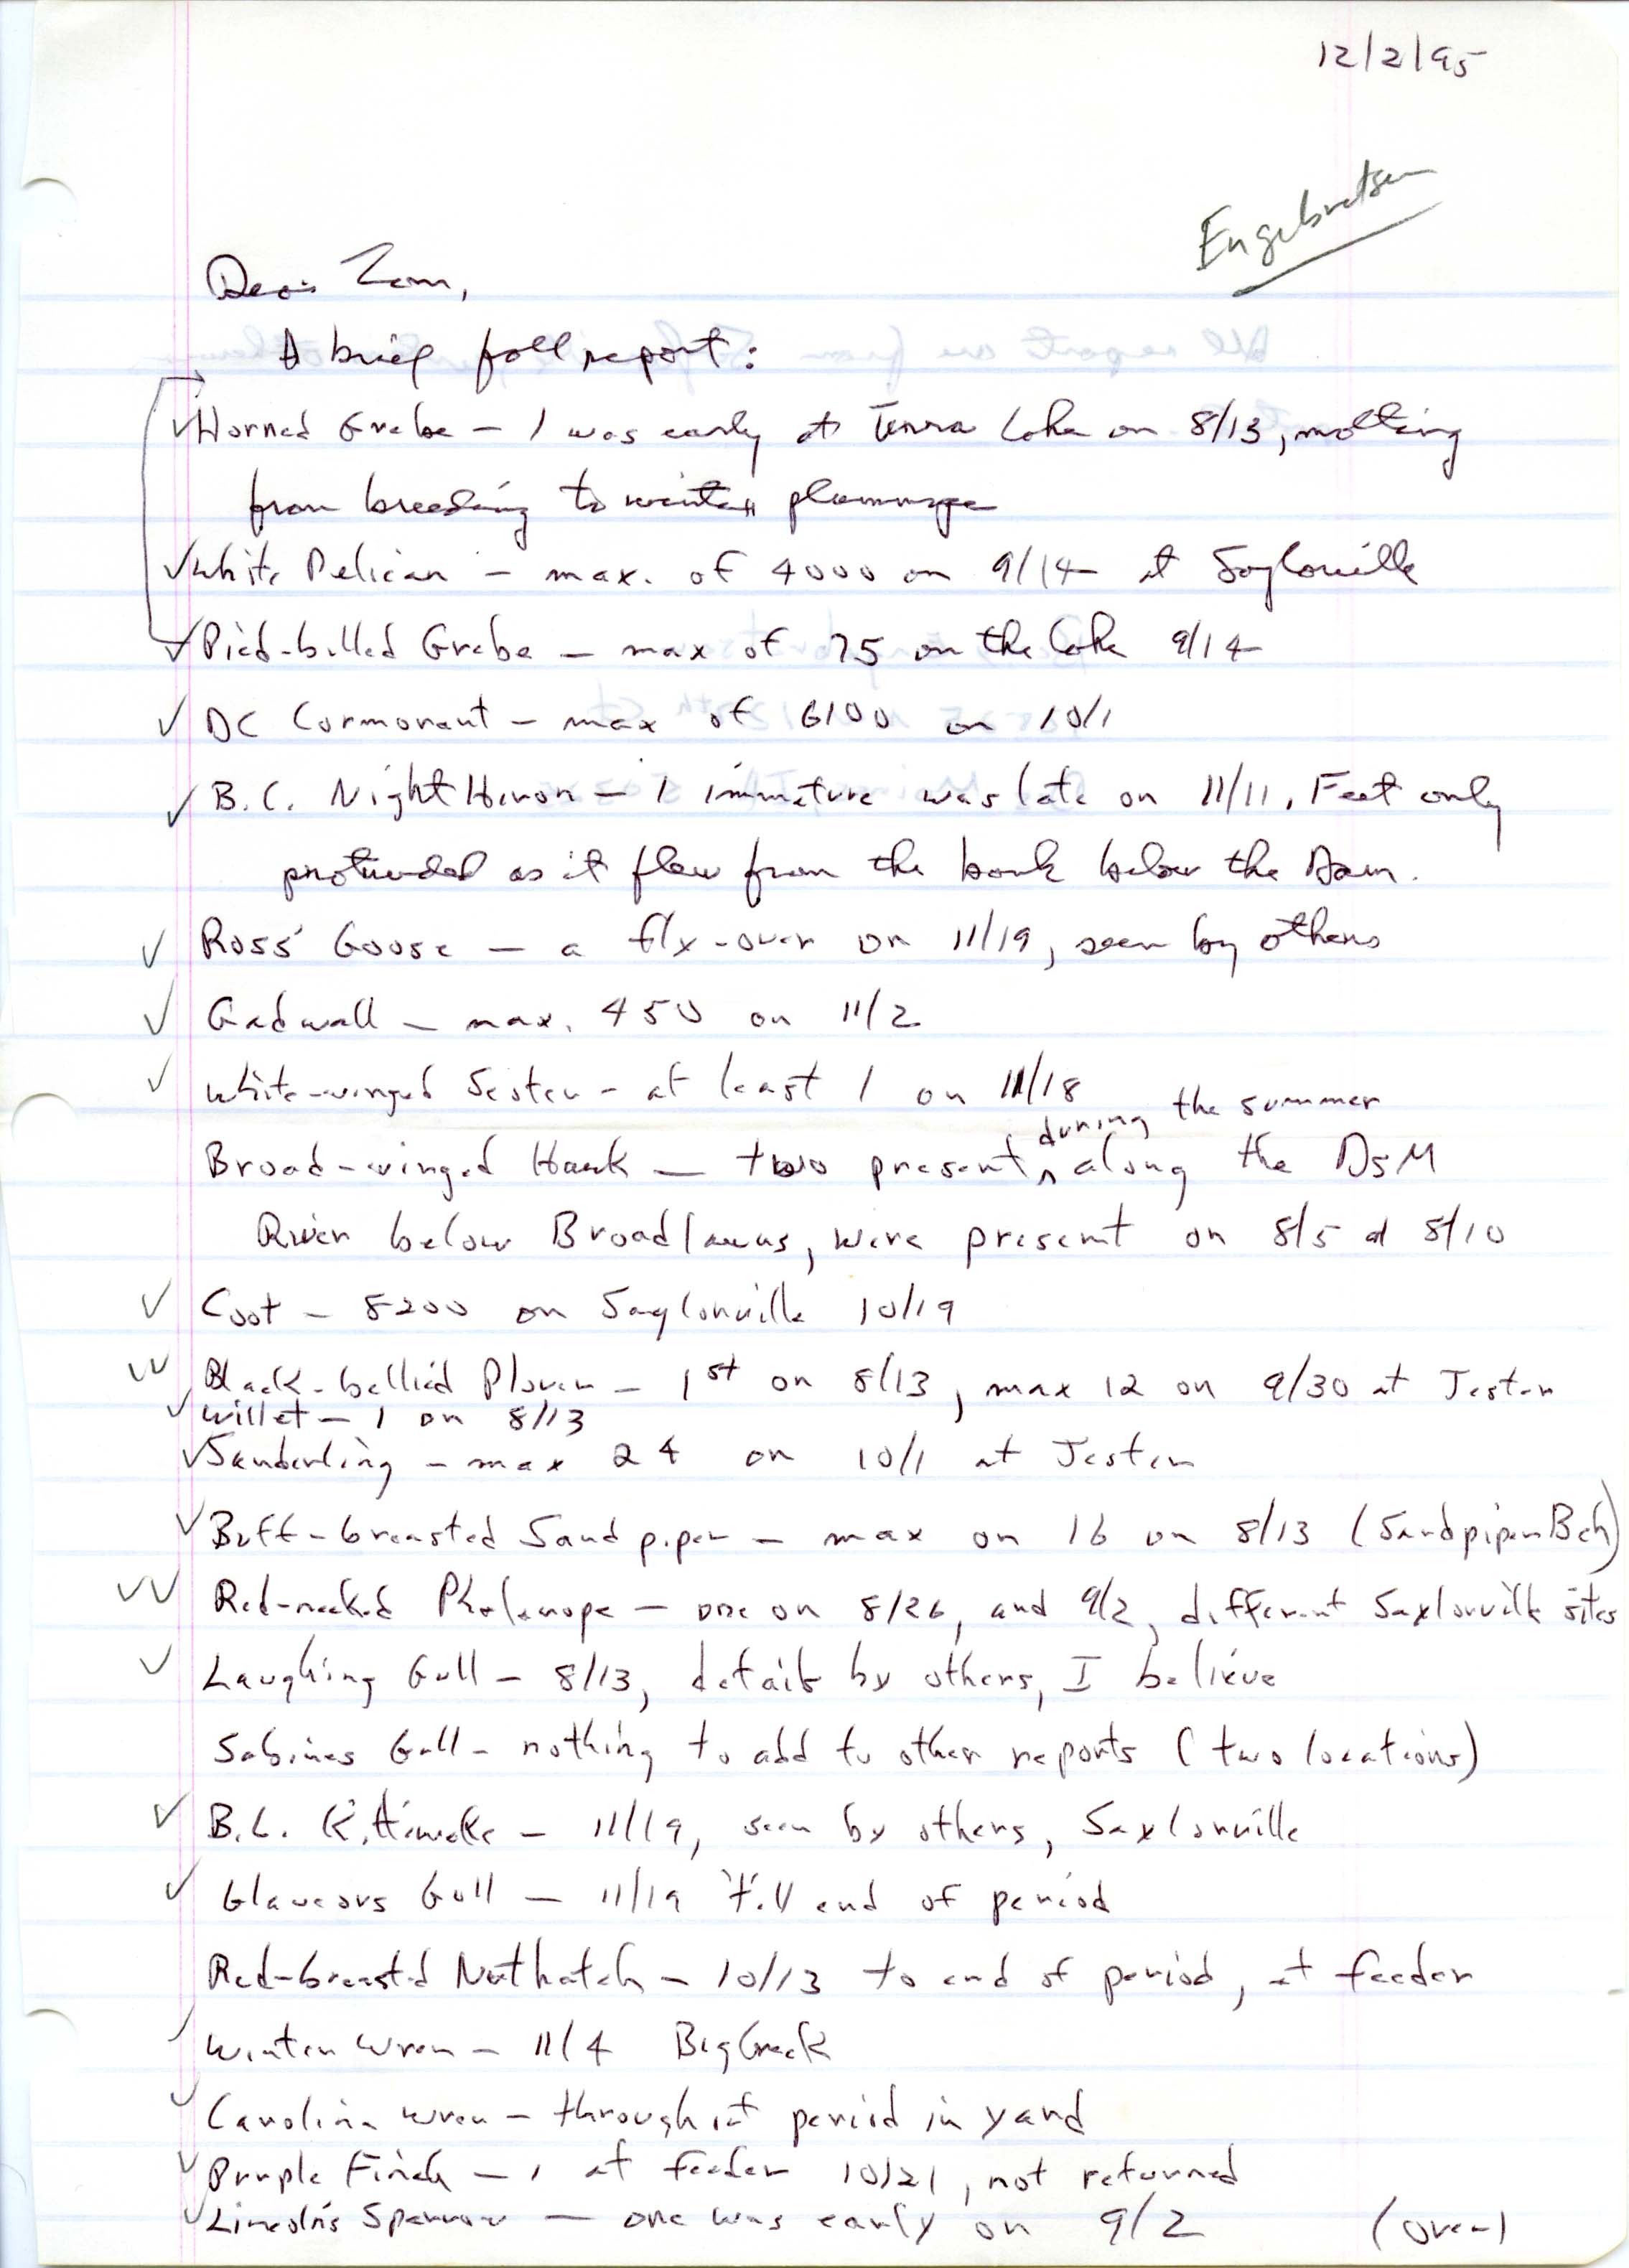 Bery Engebretsen letter to Thomas H. Kent regarding bird sightings, December 2, 1995